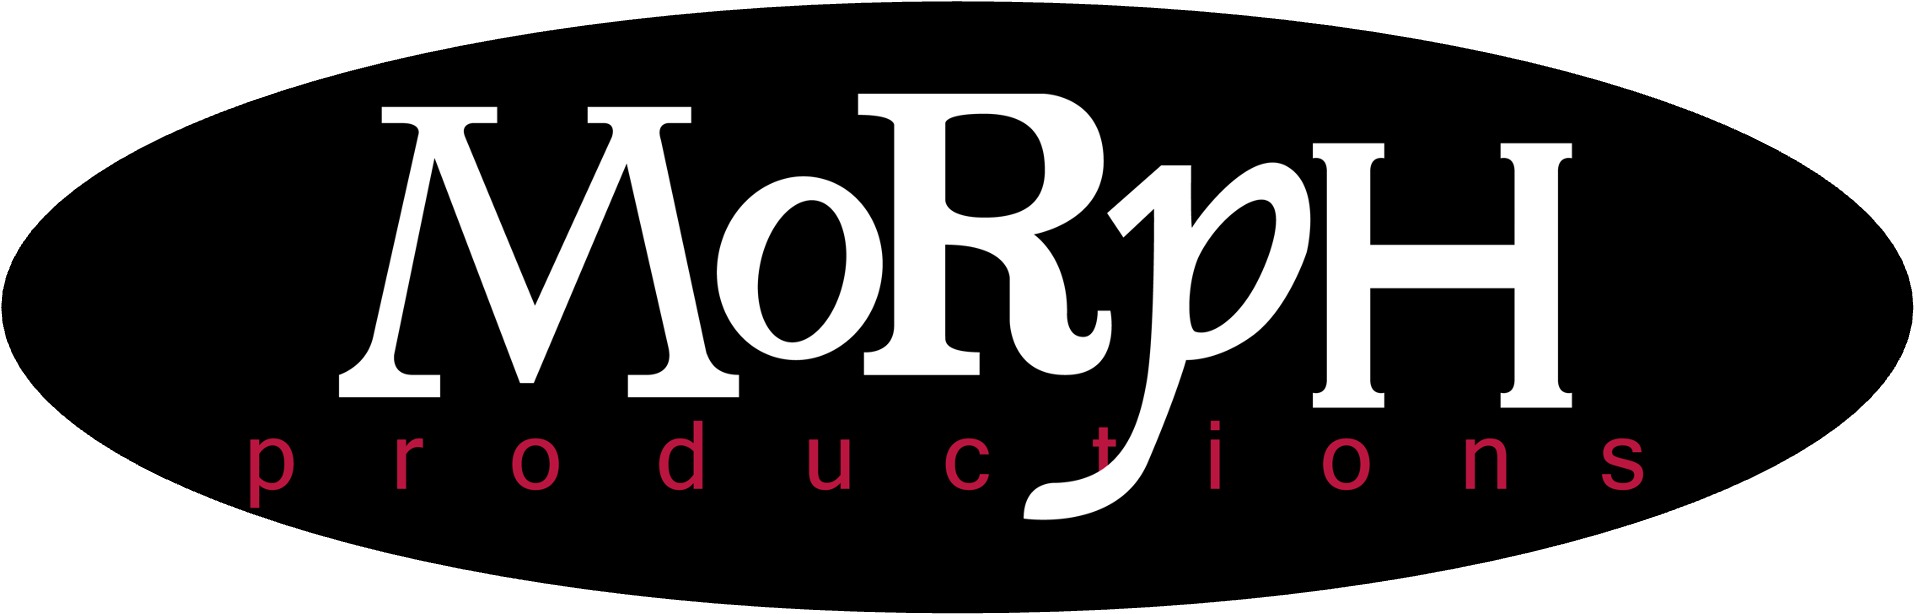 Morph Productions logo